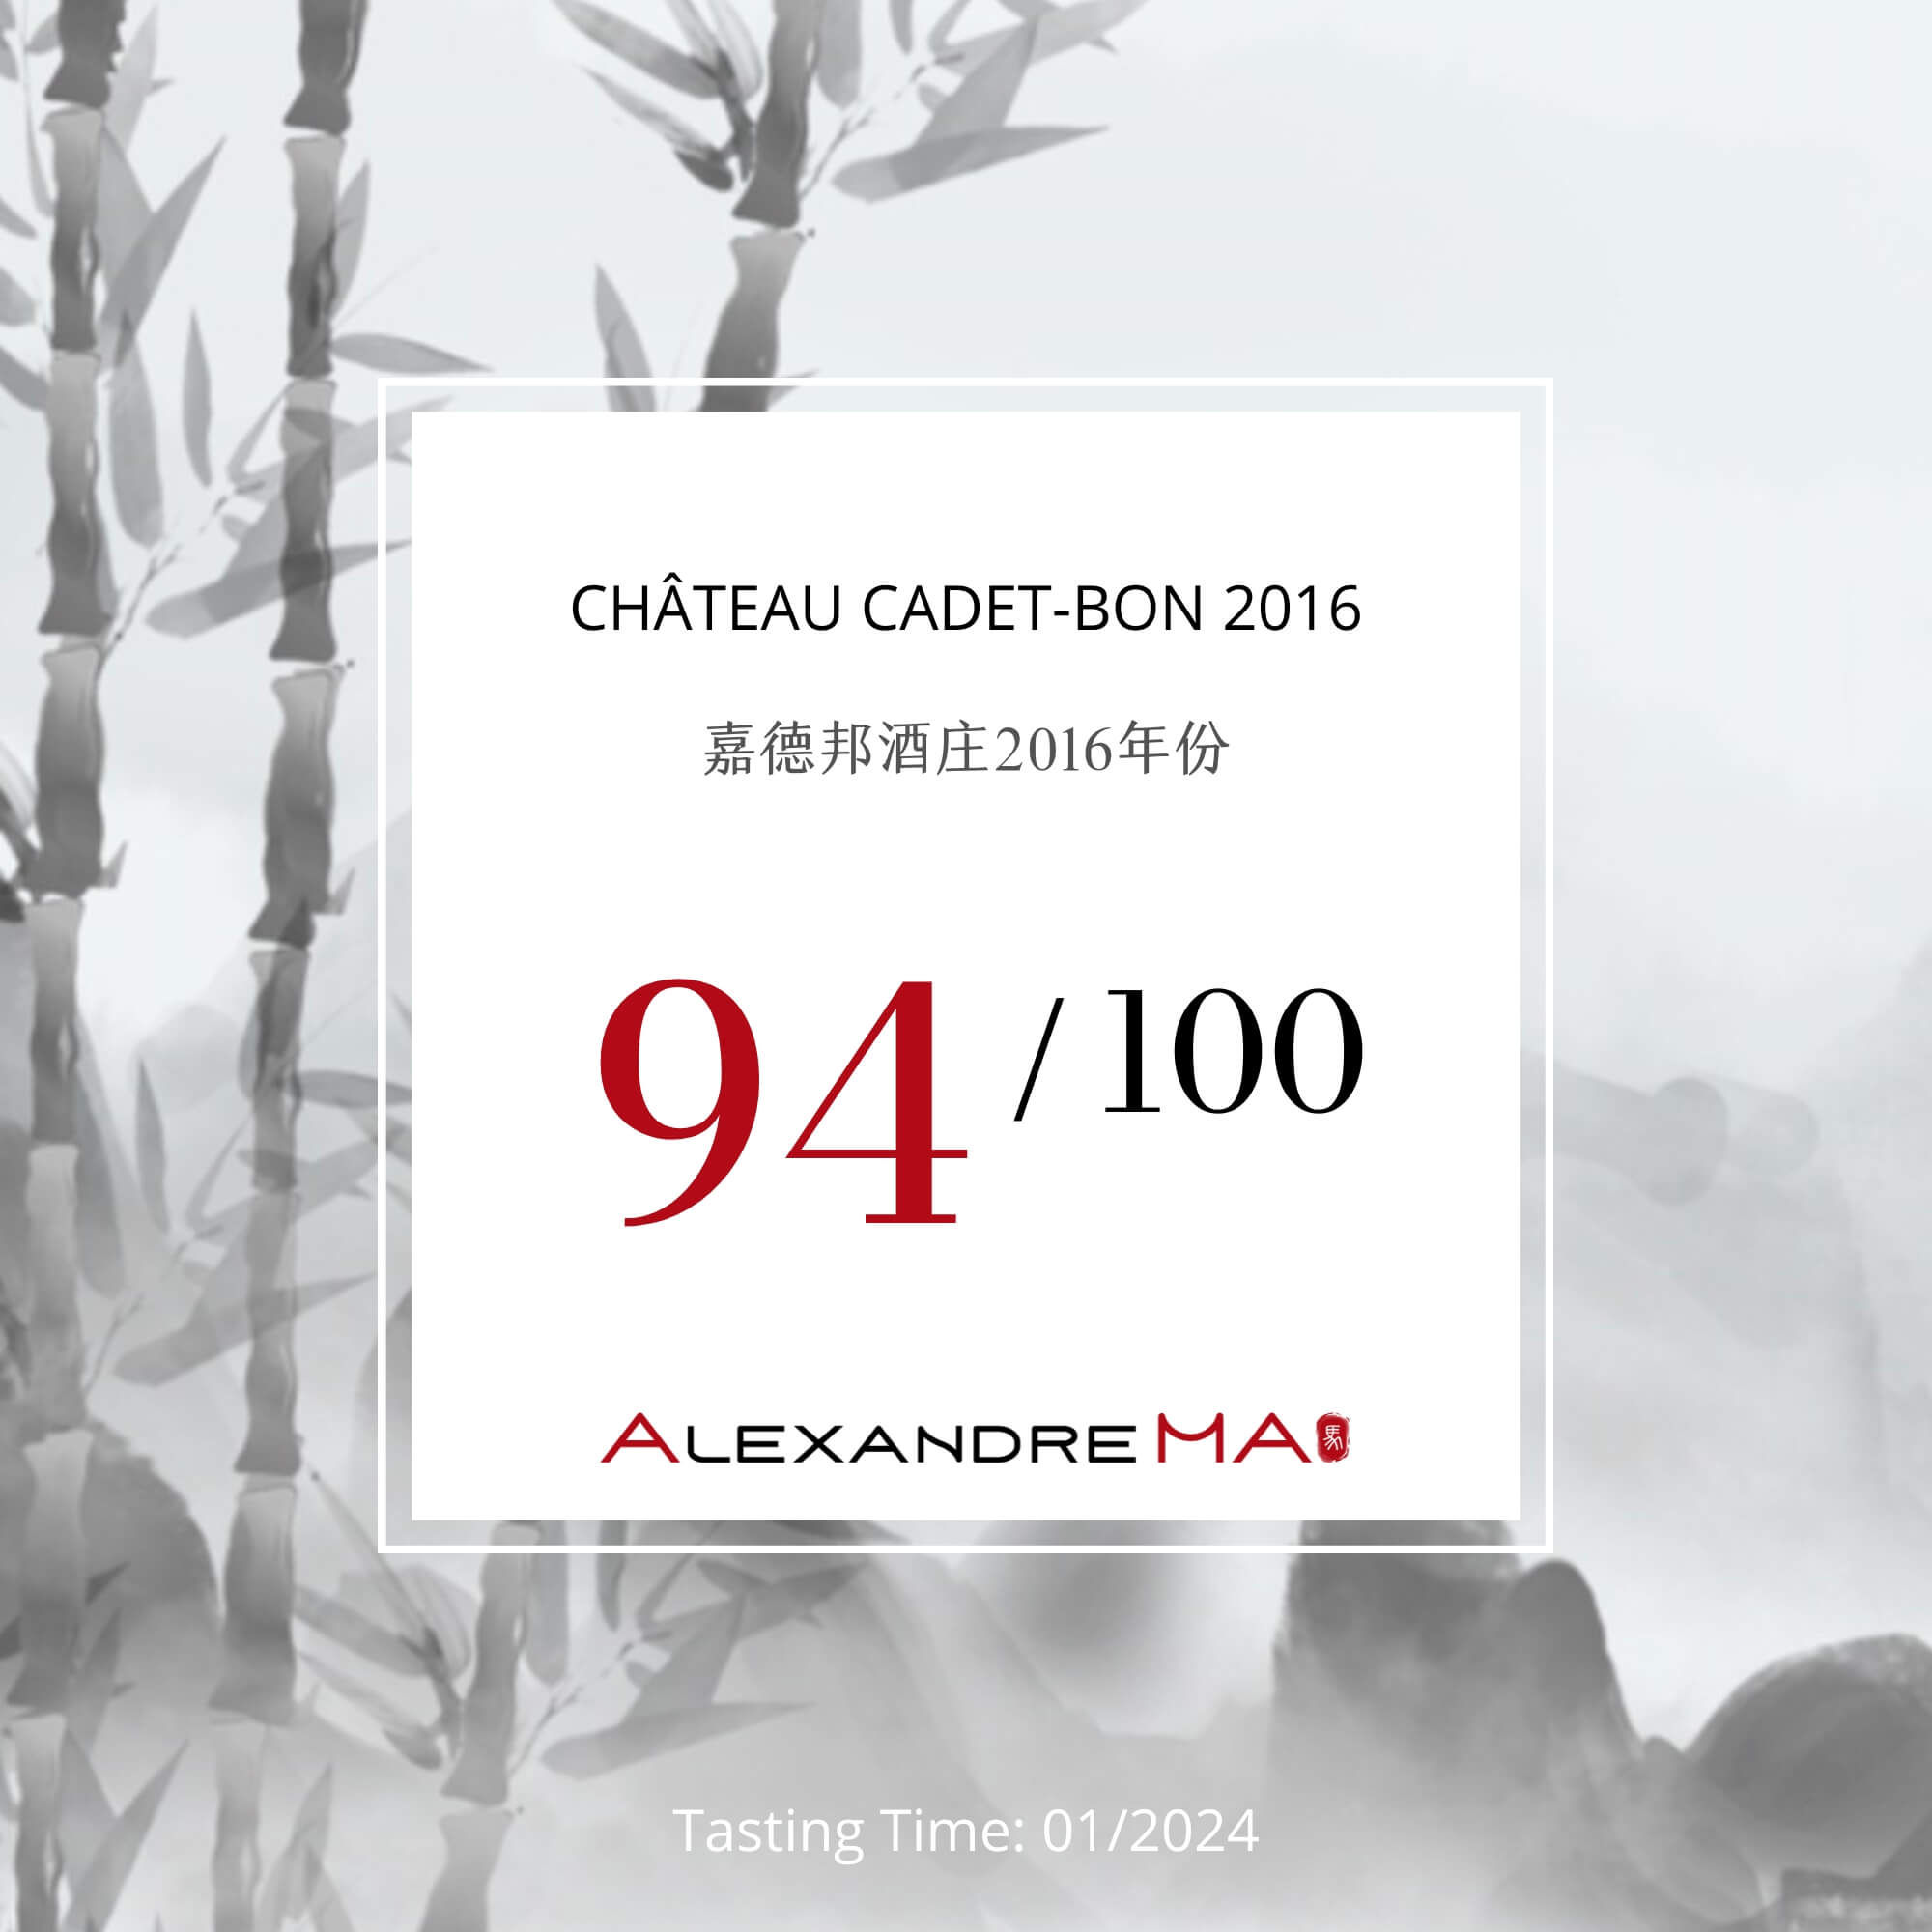 Château Cadet-Bon 2016 - Alexandre MA